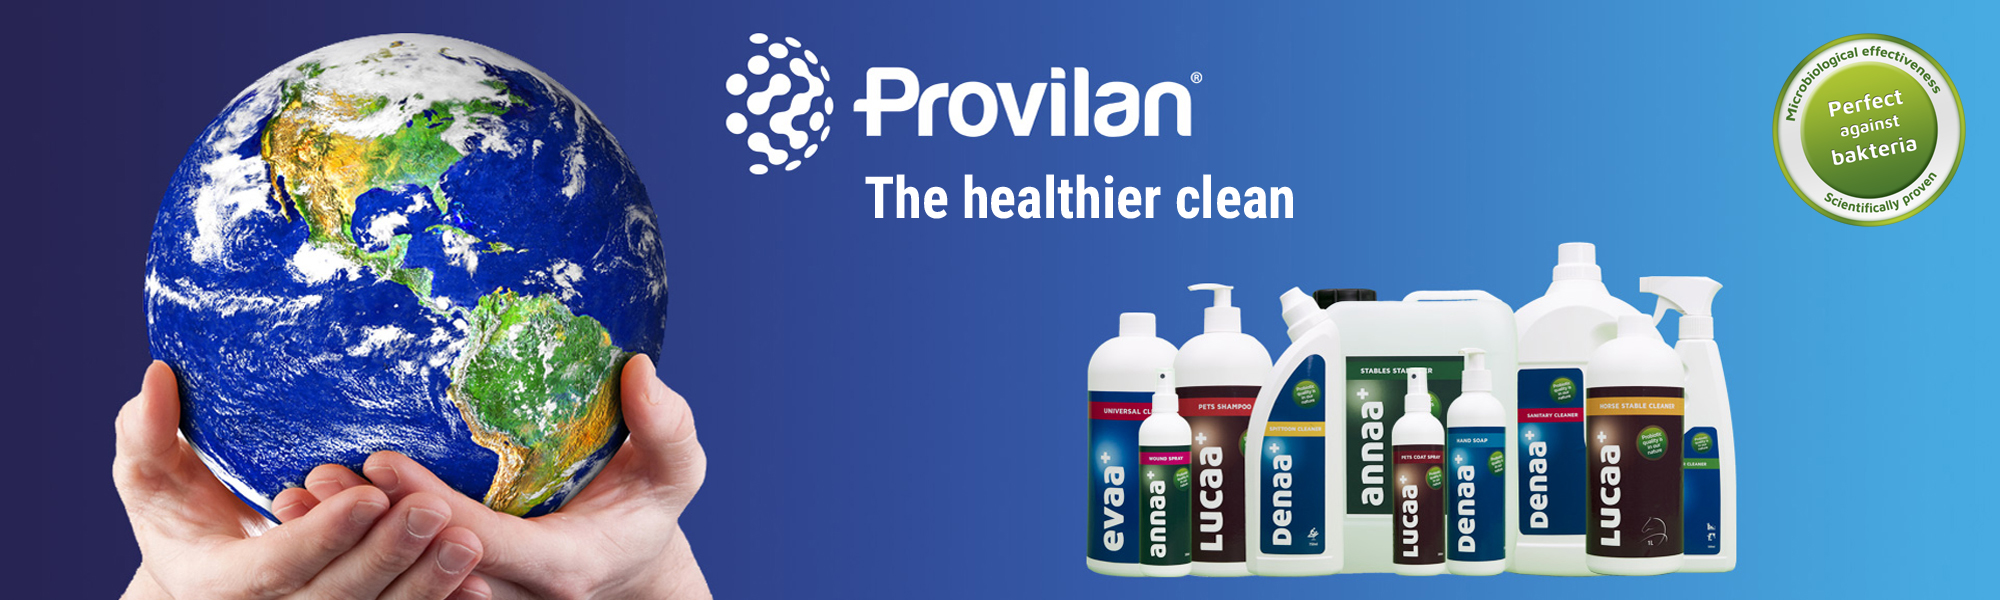 Provilan. More than just innovation.